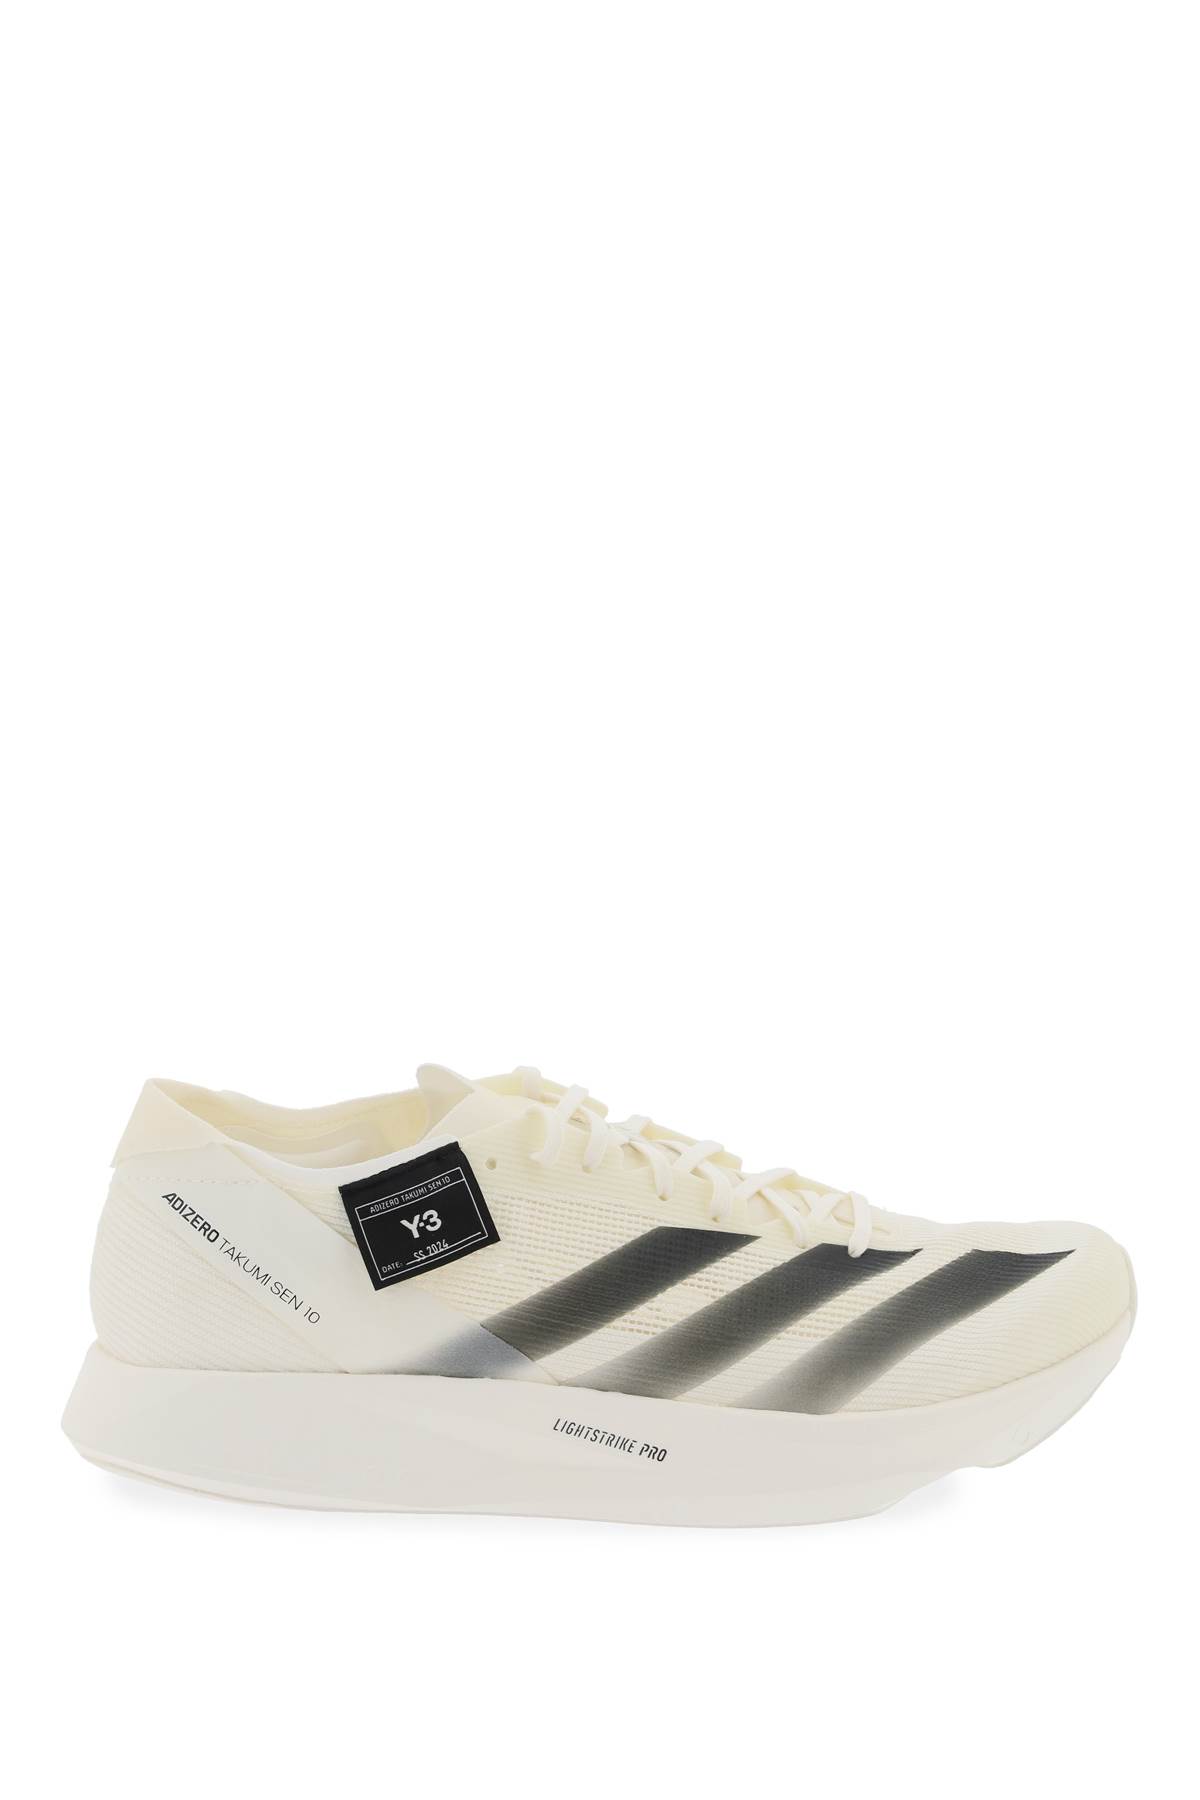 takumi Sen 10 White Fabric Sneakers